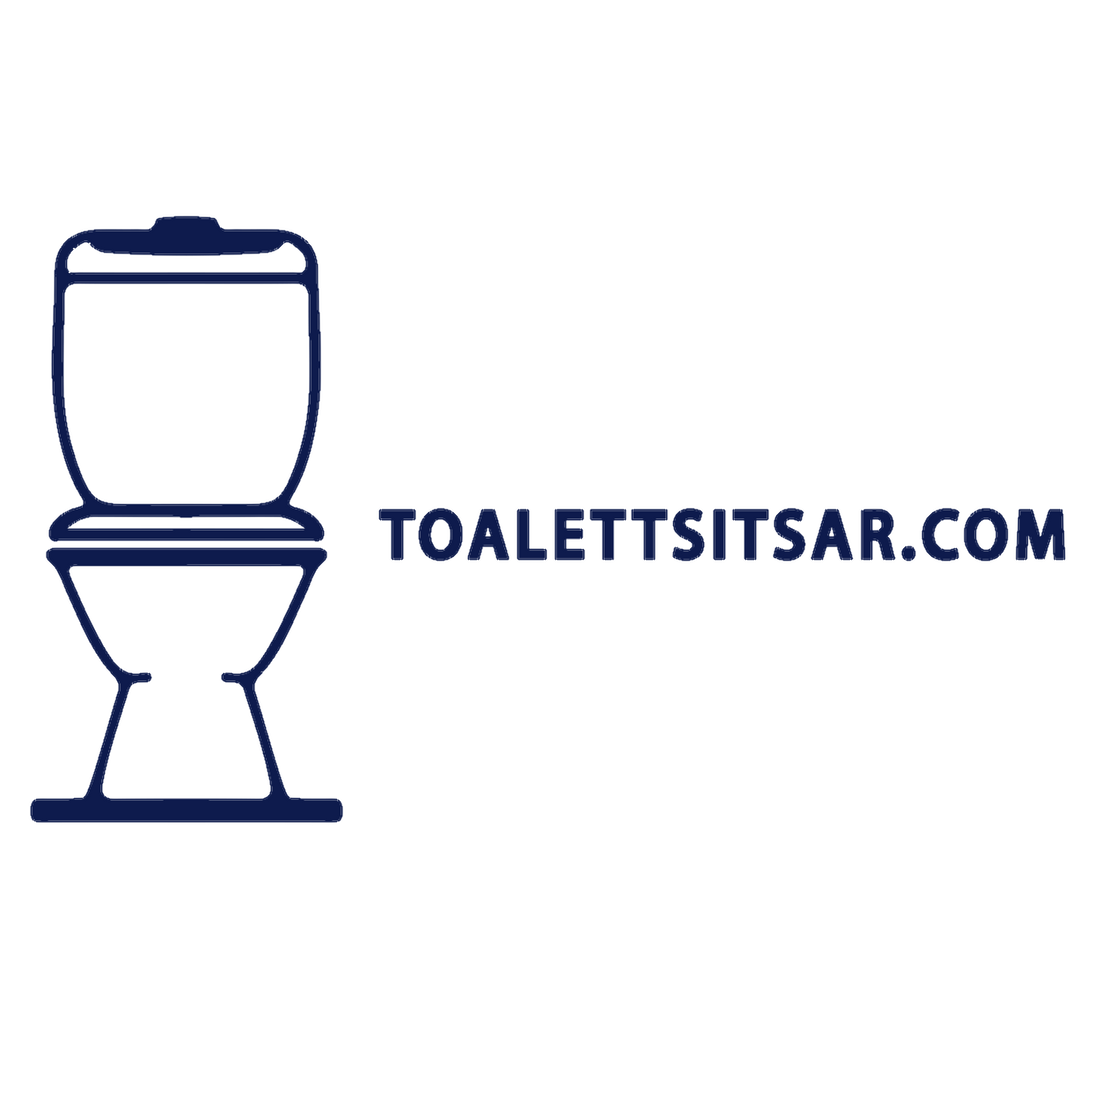 Köp din nya toasits på Toalettsitsar.com